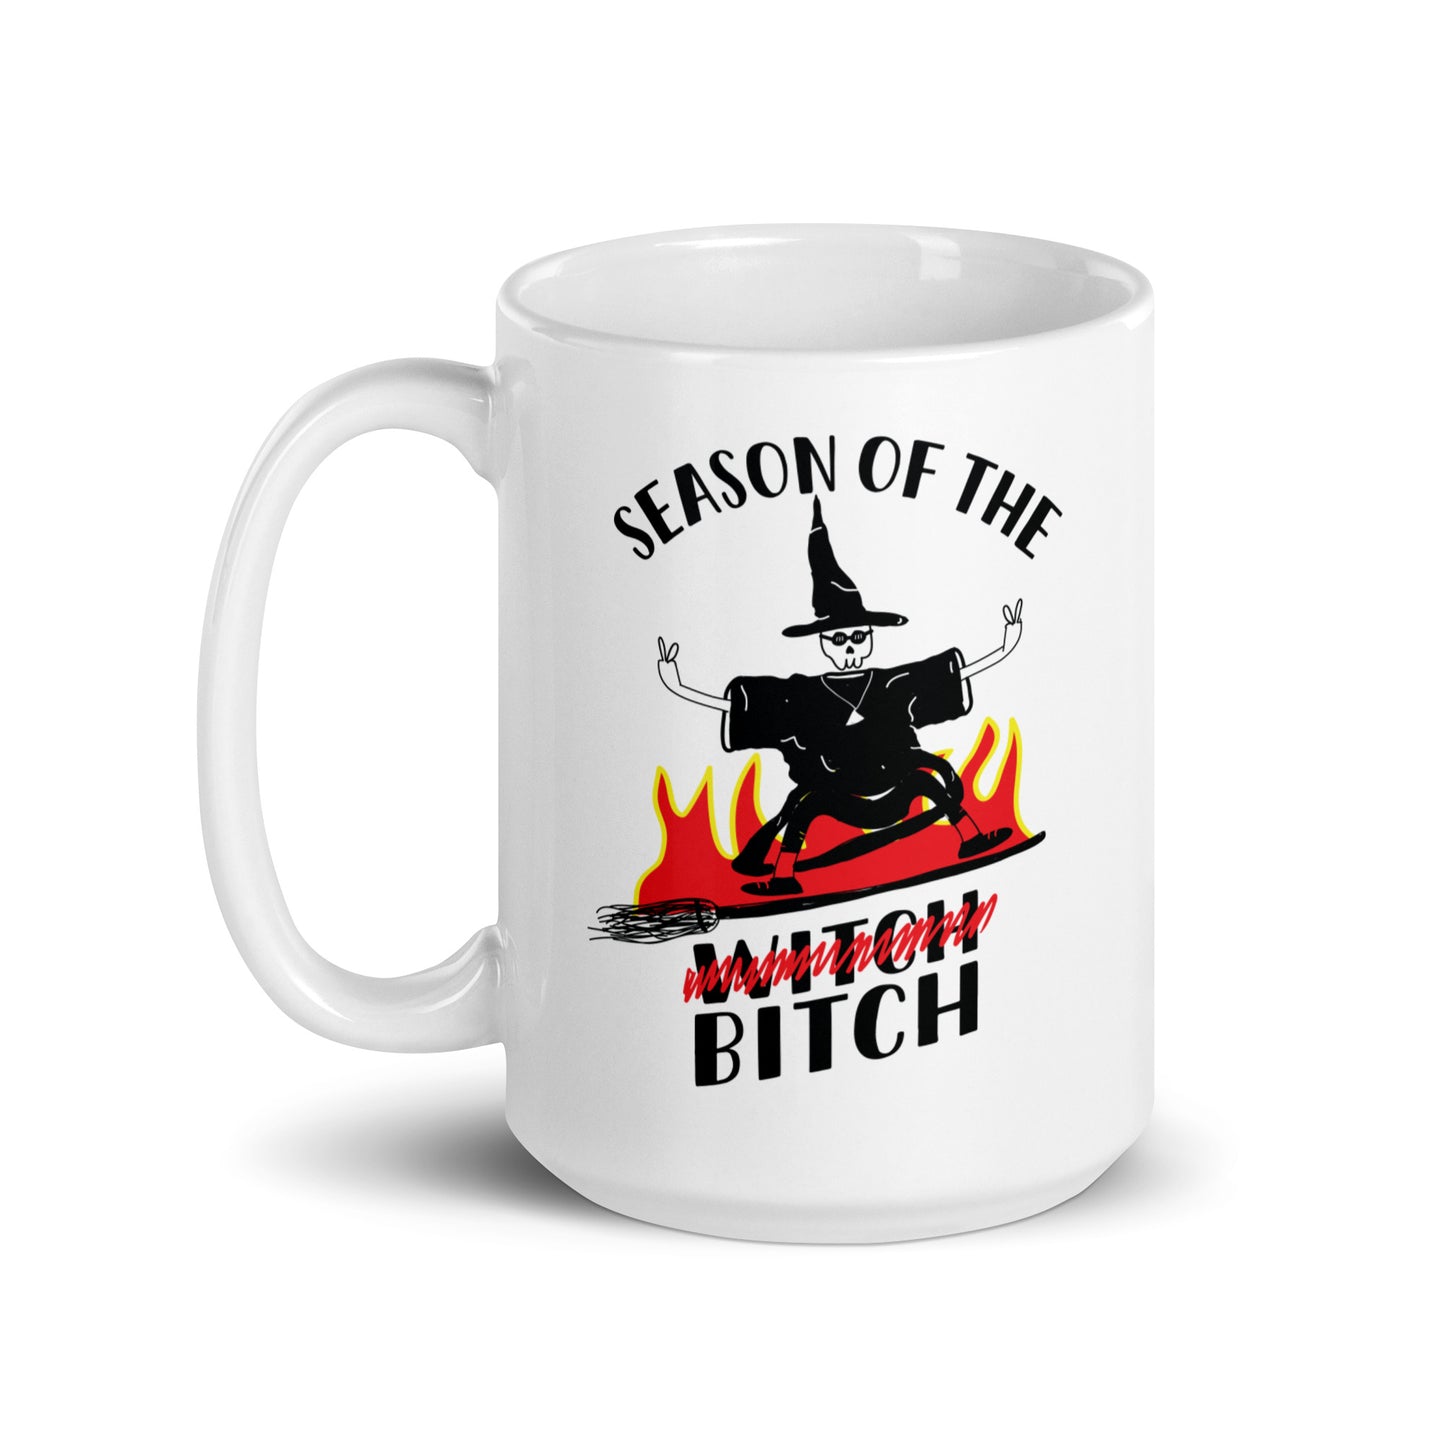 Season of the Bitch mug